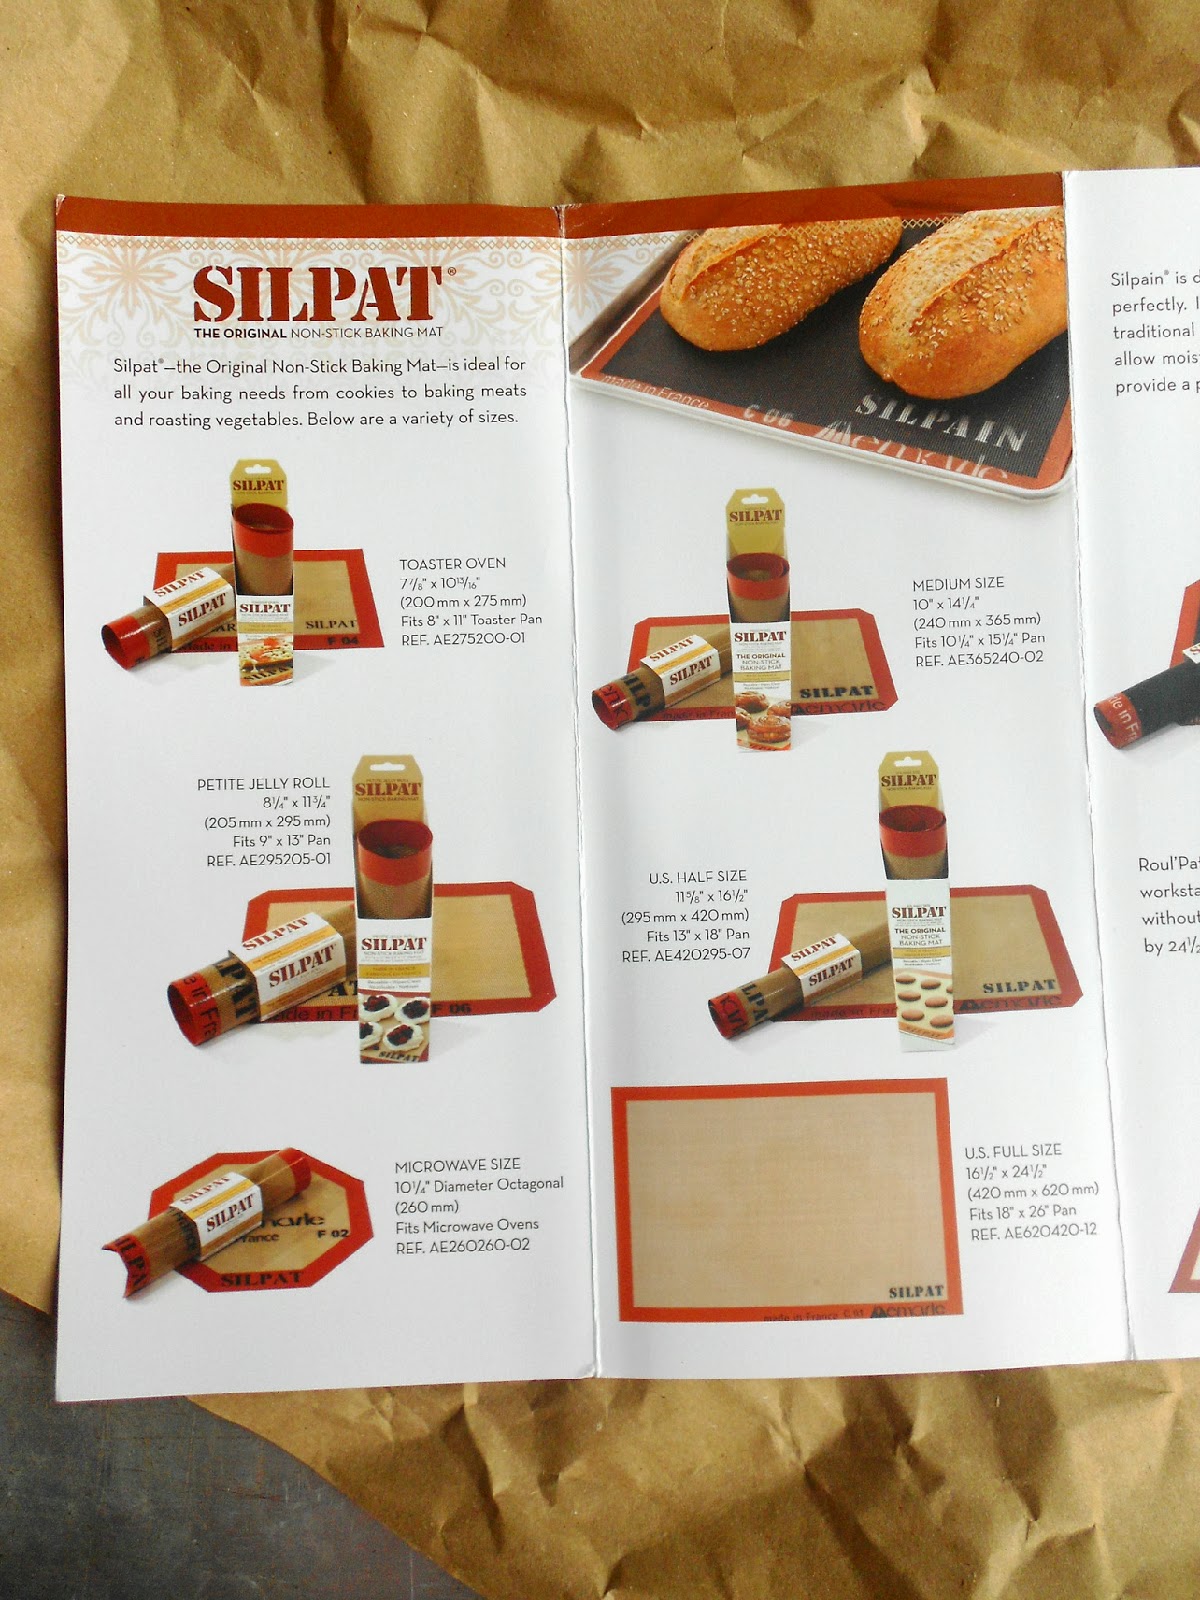 https://4.bp.blogspot.com/-Cp8U7EJHtw0/Ukw30QKi_3I/AAAAAAAAF5I/gL0WiG44DAI/s1600/silpat-silicone-baking-mat-review.jpg